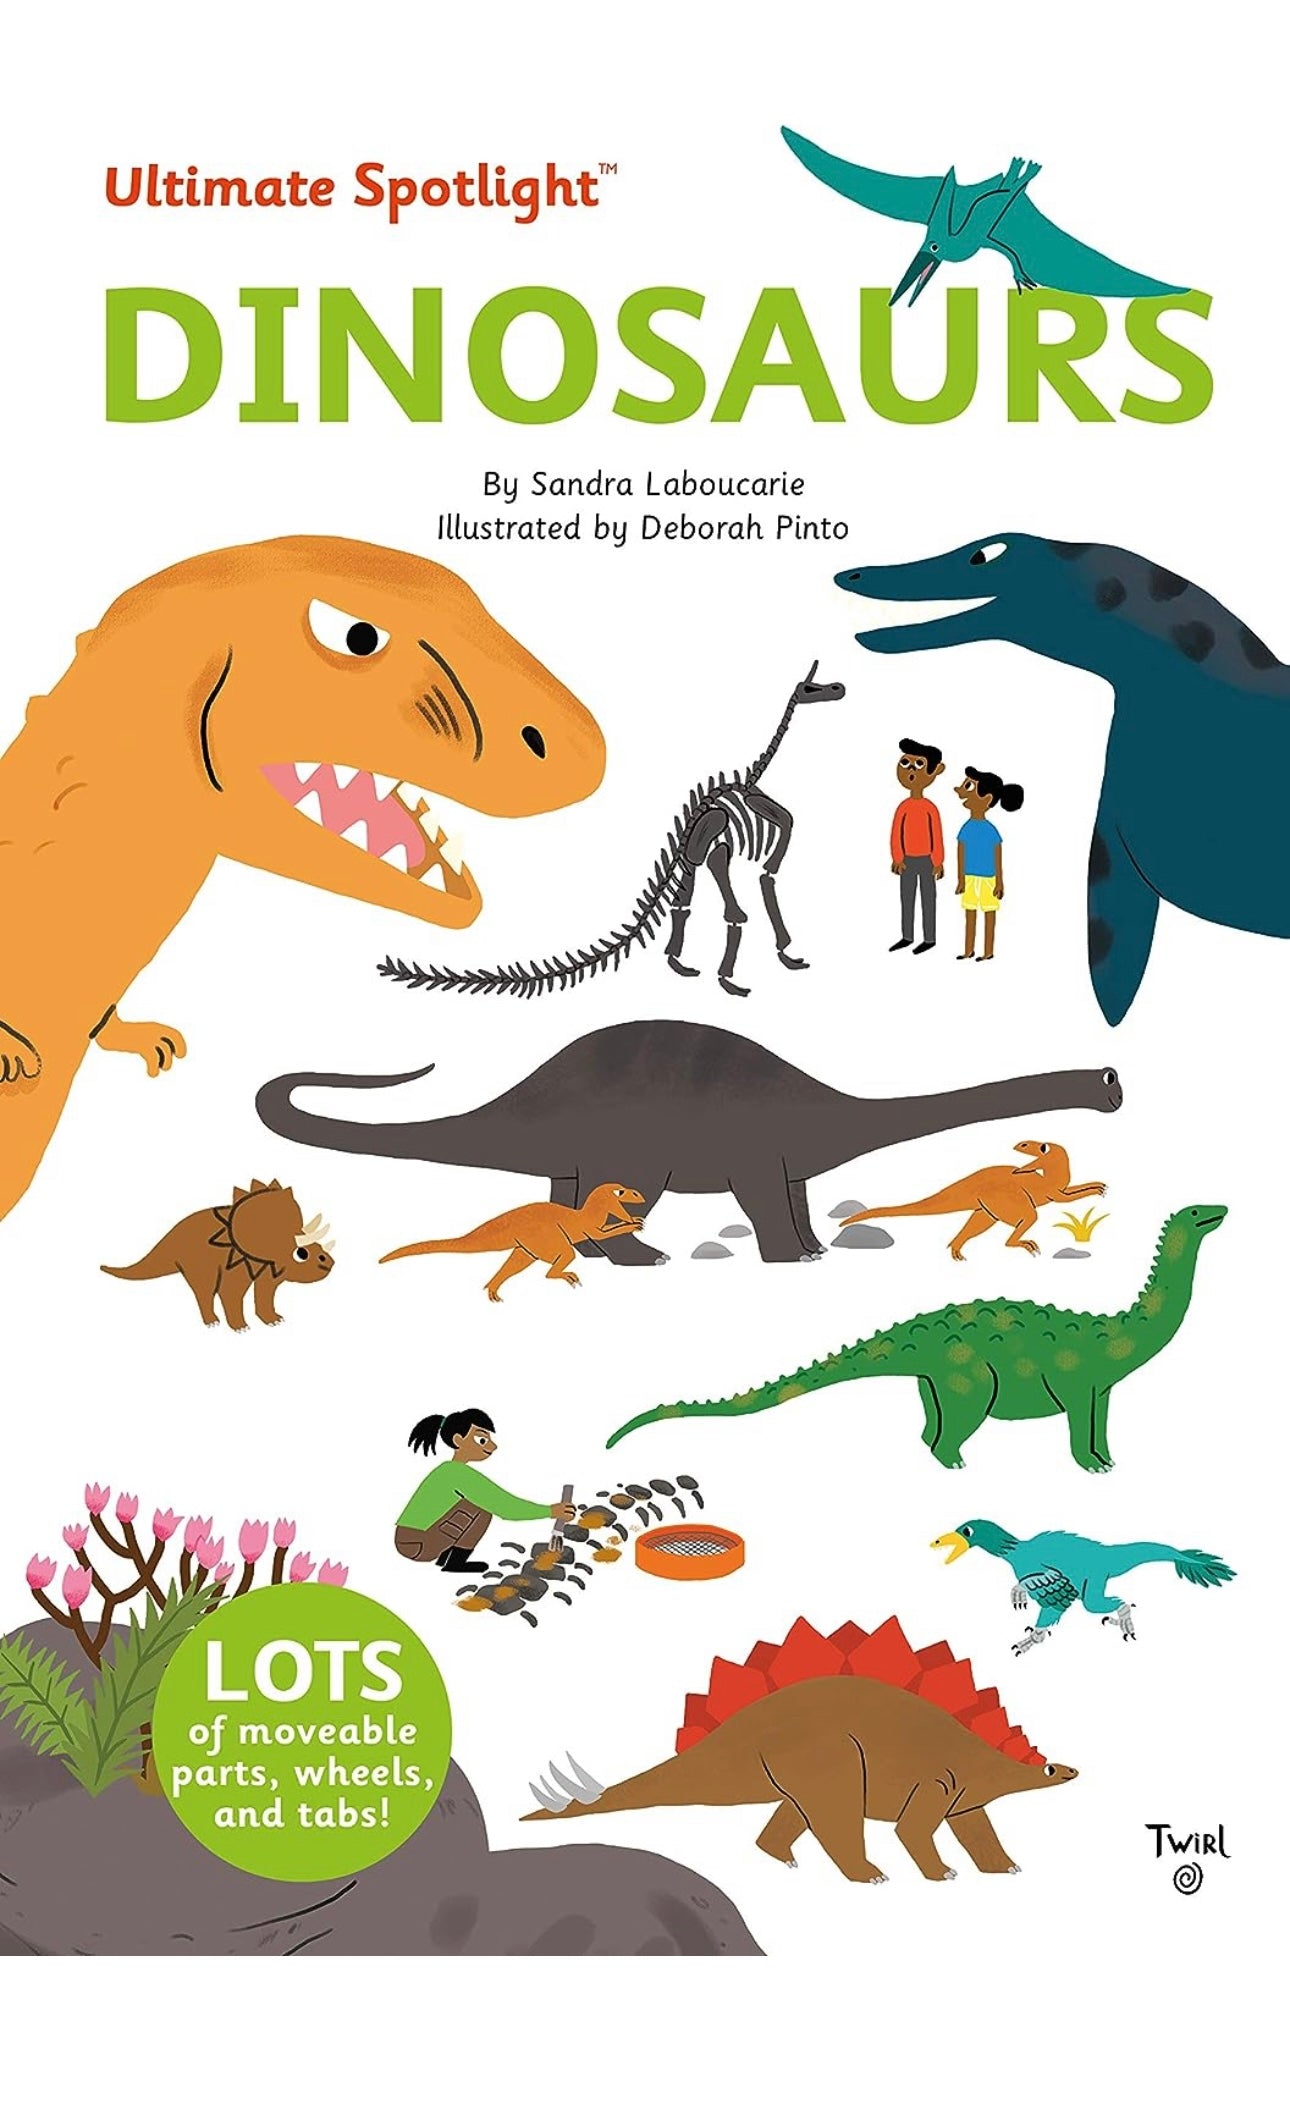 Book - Dinosaurs, Ultimate Spotlight